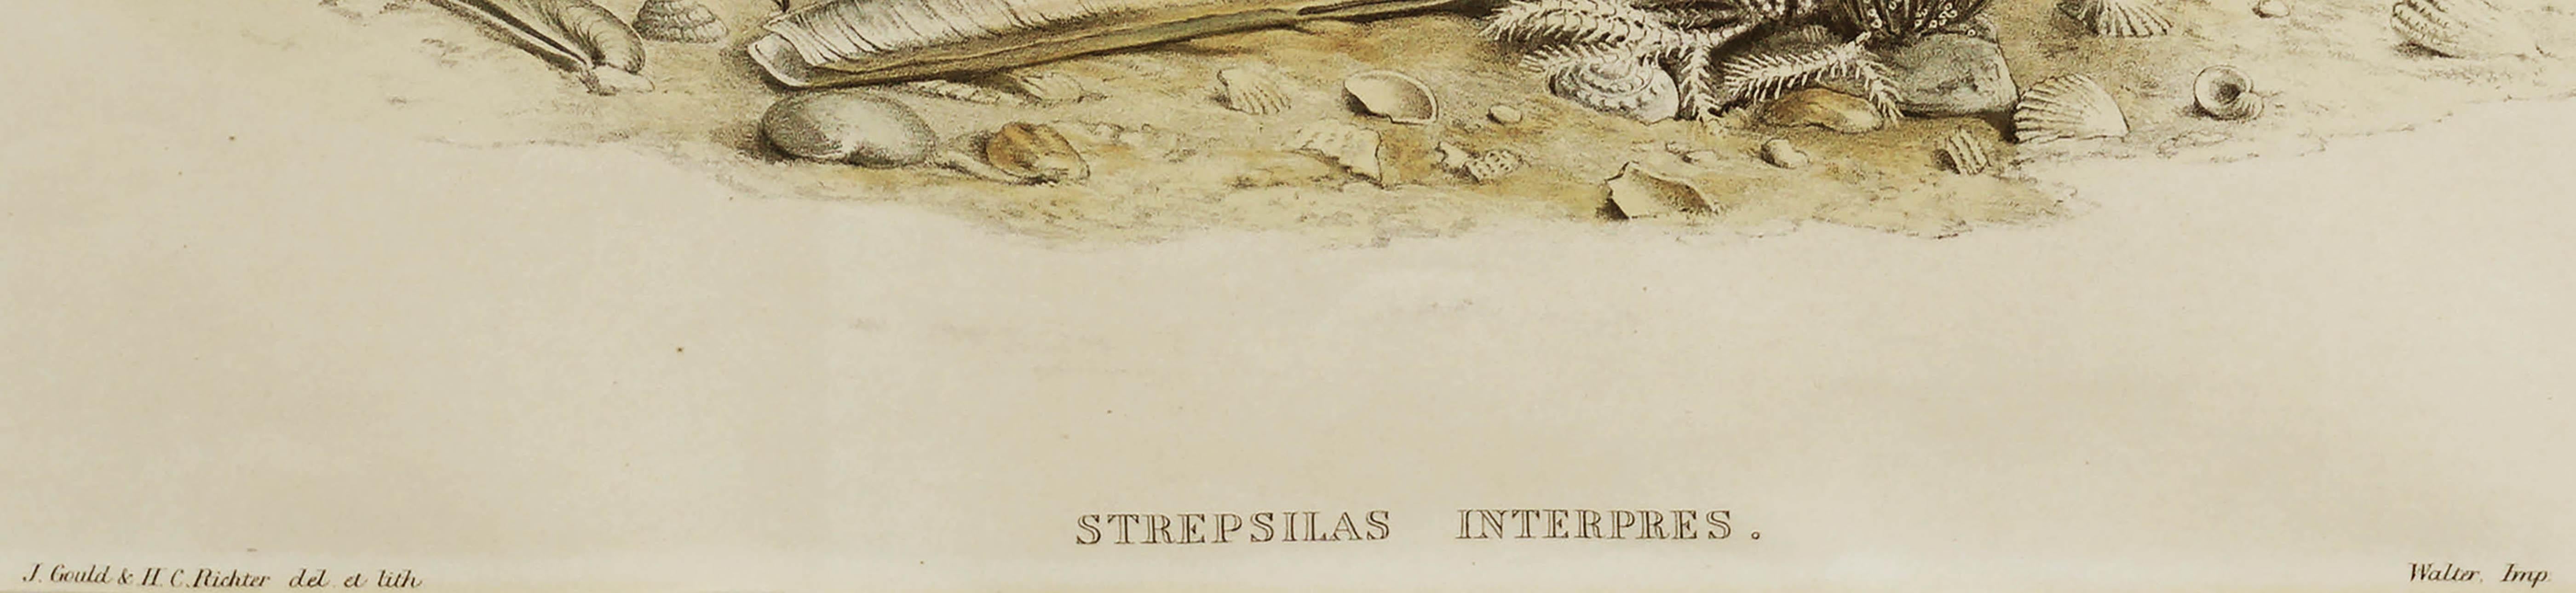 John Gould Turnstone Strepsilas Interpres, lithograph c.1850 For Sale 1